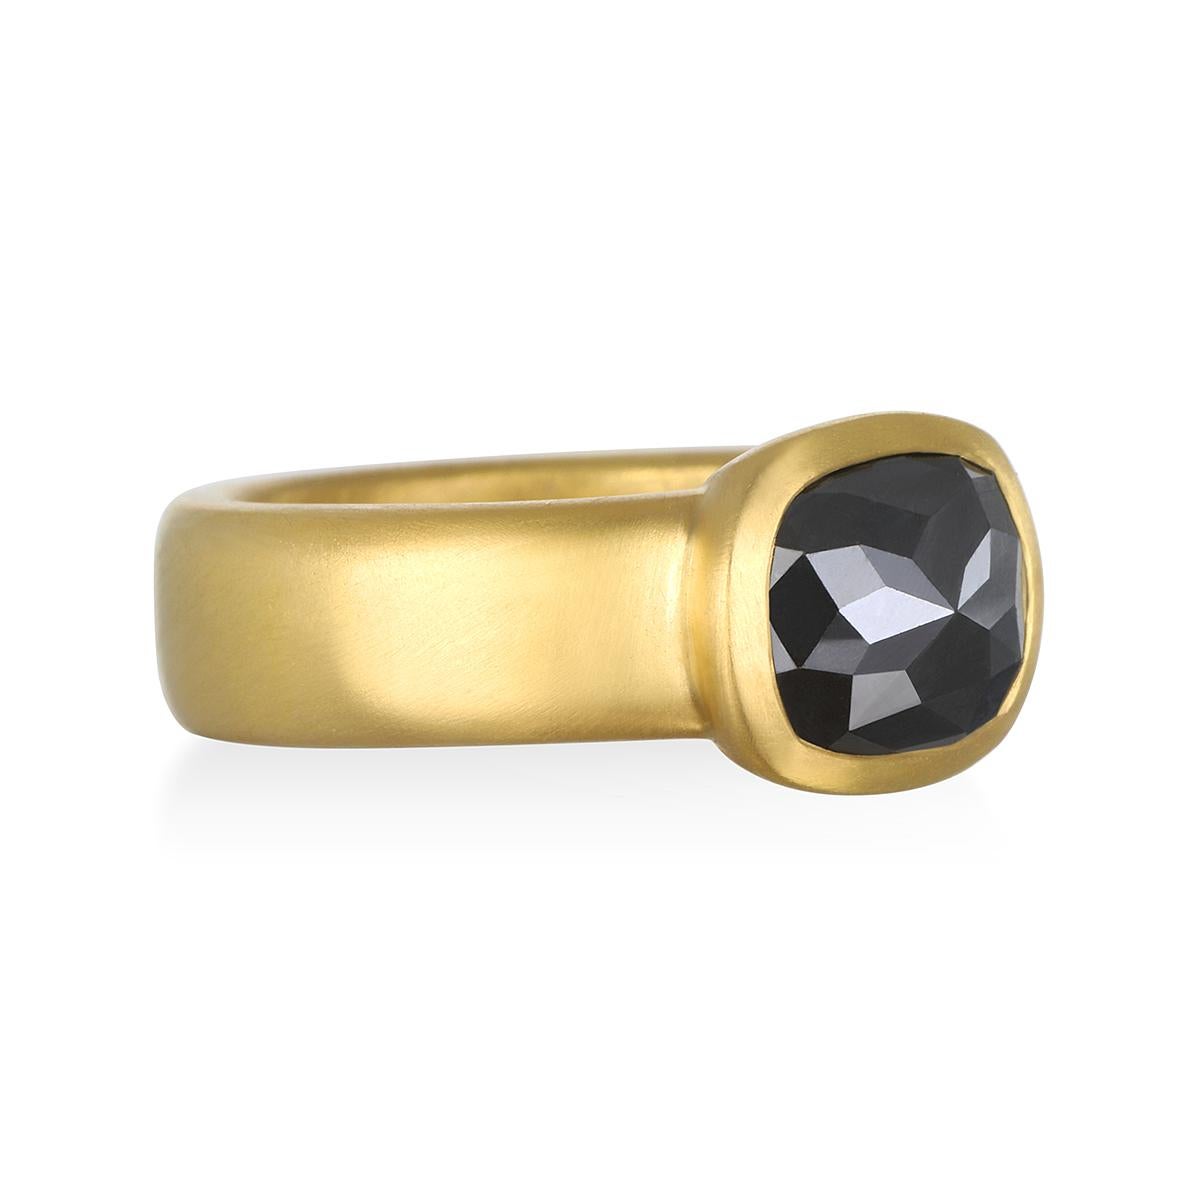 Faye Kim's 22 Karat Gold Black Diamond Bezel Ring

Black Diamond 2.16 cts

Square shank 5 x 2.4mm

Size 7.25 - can be resized

Made in the USA